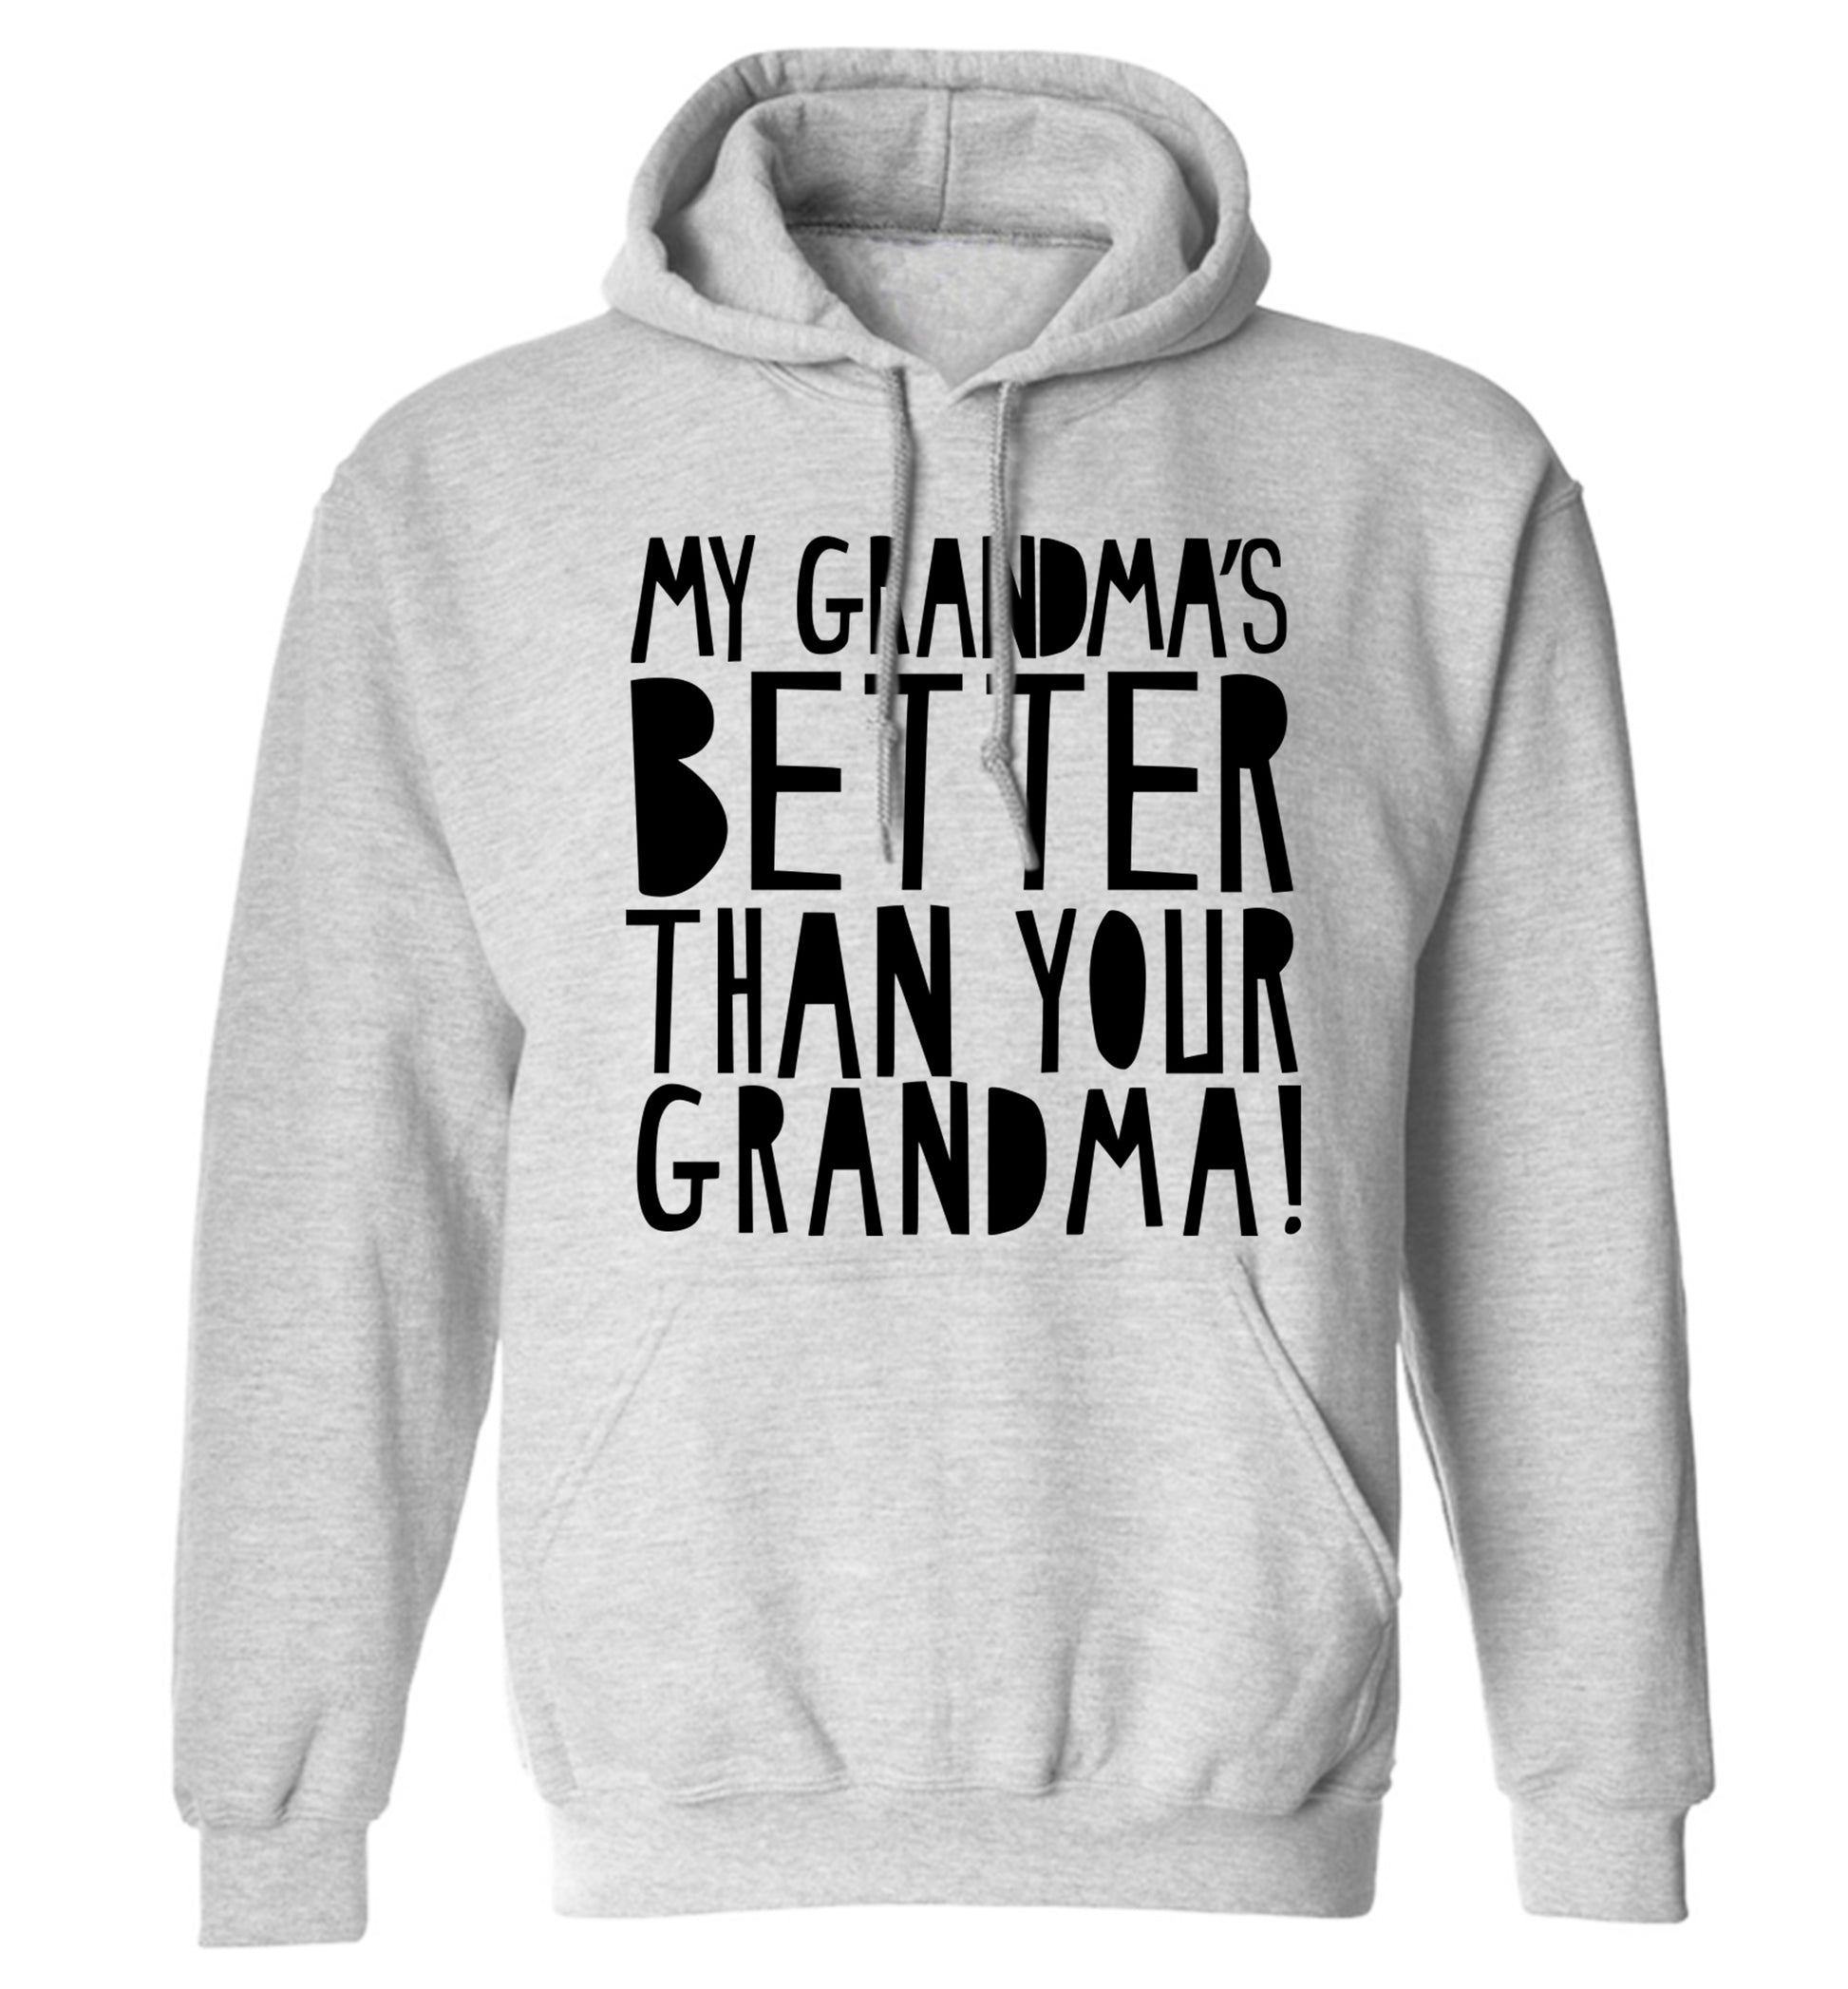 My grandma's better than your grandma adults unisex grey hoodie 2XL